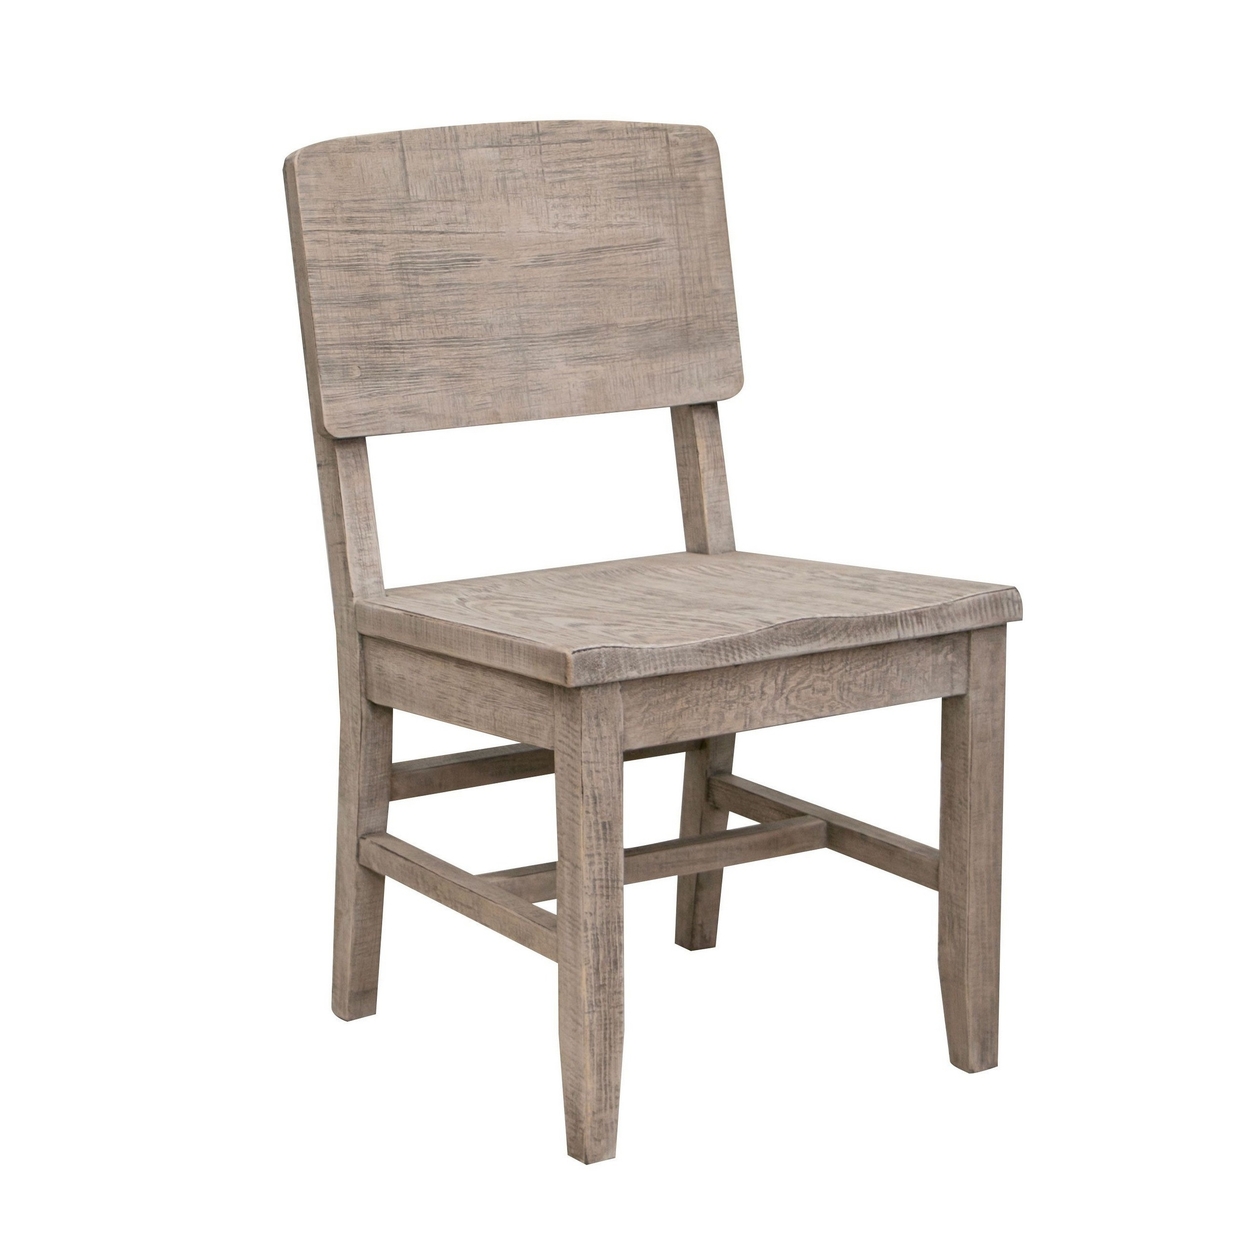 Rien 23 Inch Dining Chair Set Of 2, Pine Wood, Grain Details, Rustic Gray - Saltoro Sherpi